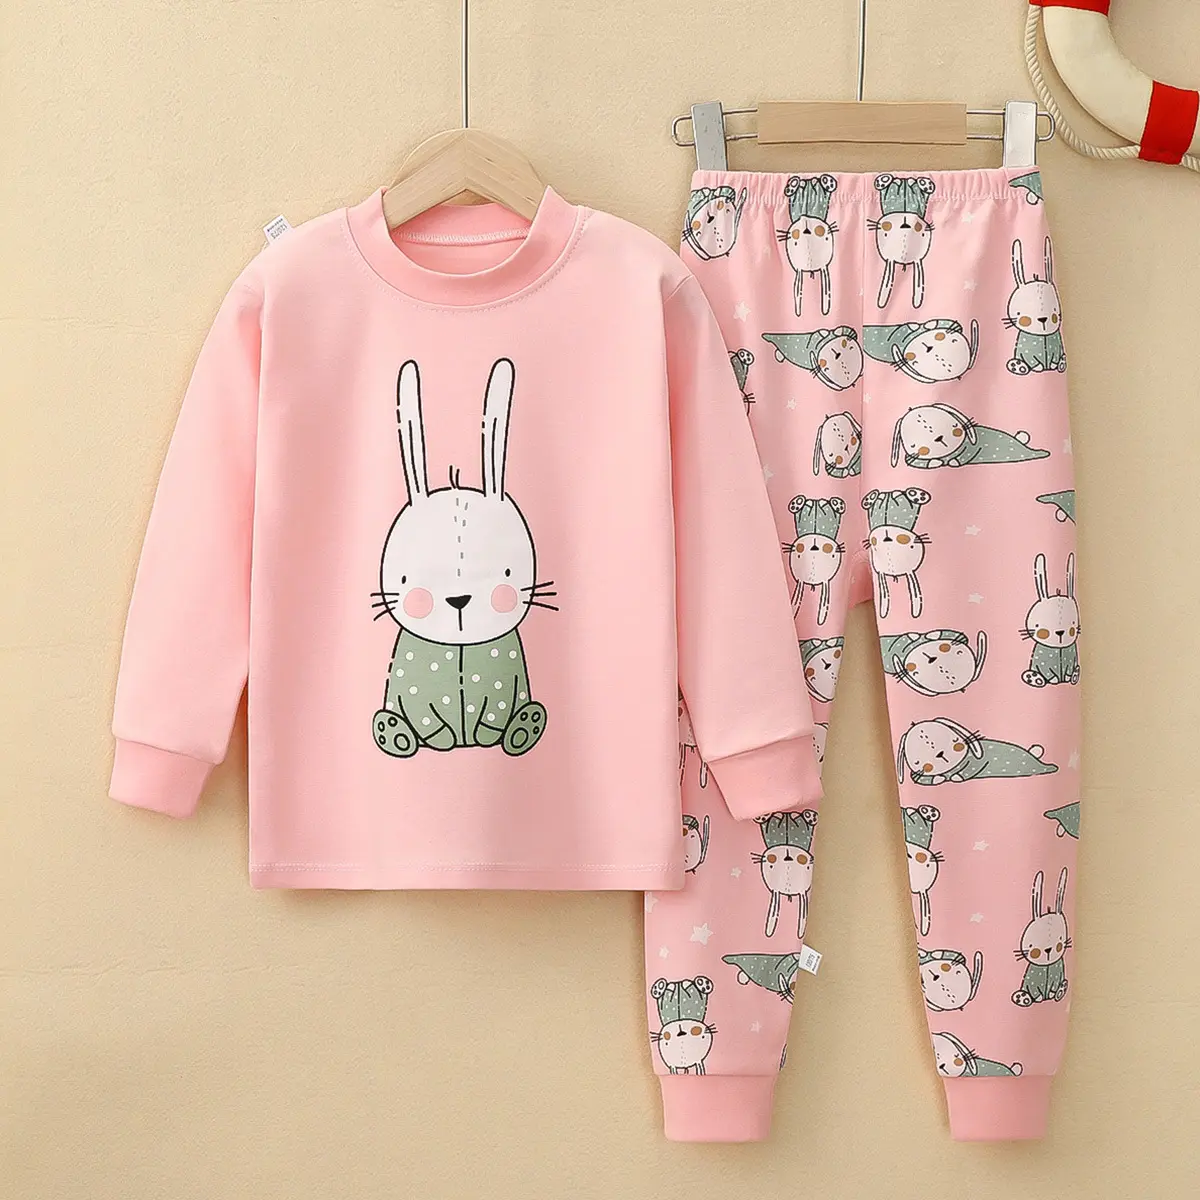 100 cotton nightwear homewear cartoon printed sleepwear pajamas kids baby girls pajamas 2pcs set